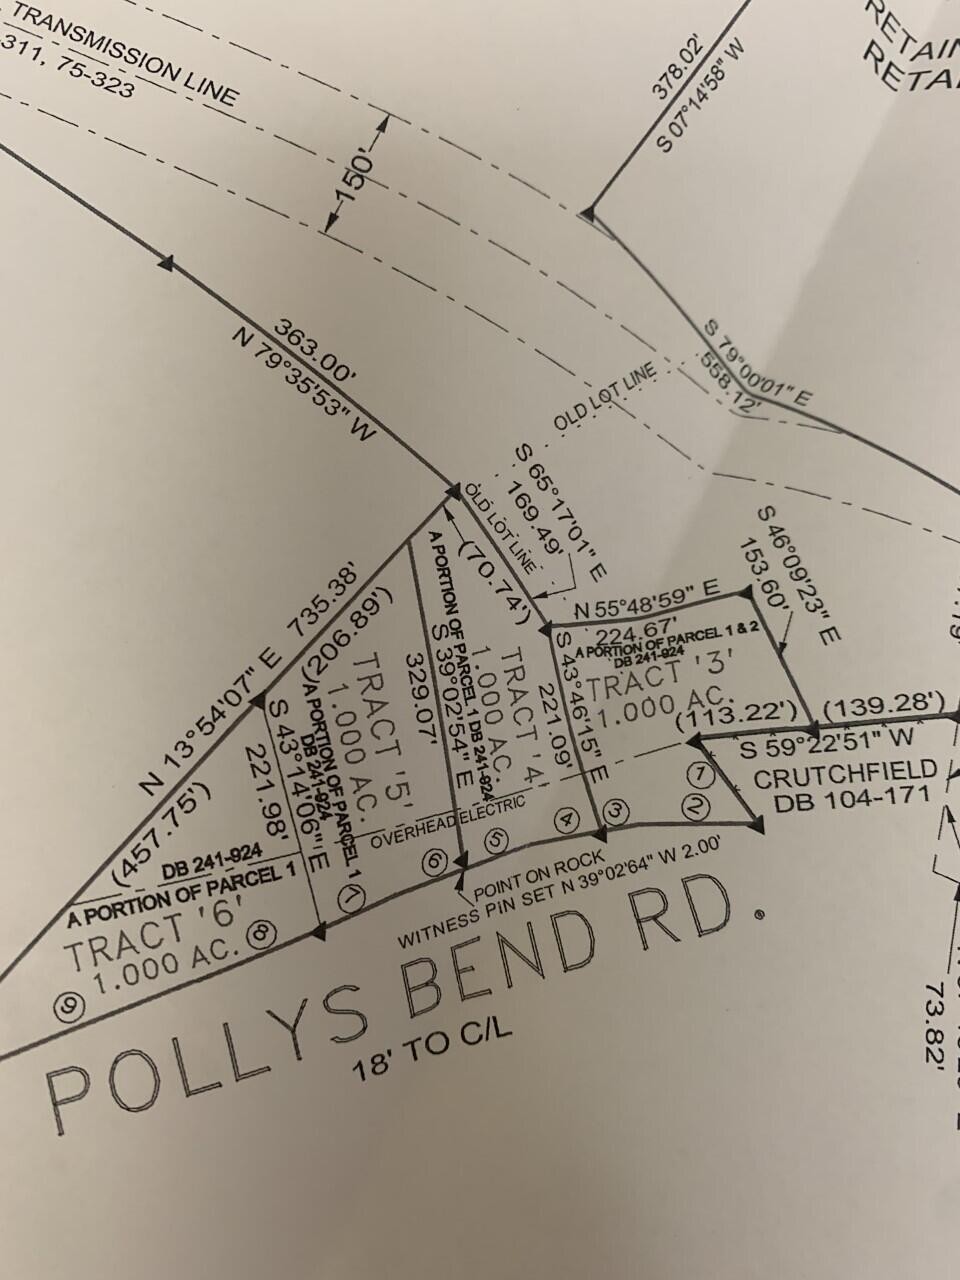 2. 0 Pollys Bend Road